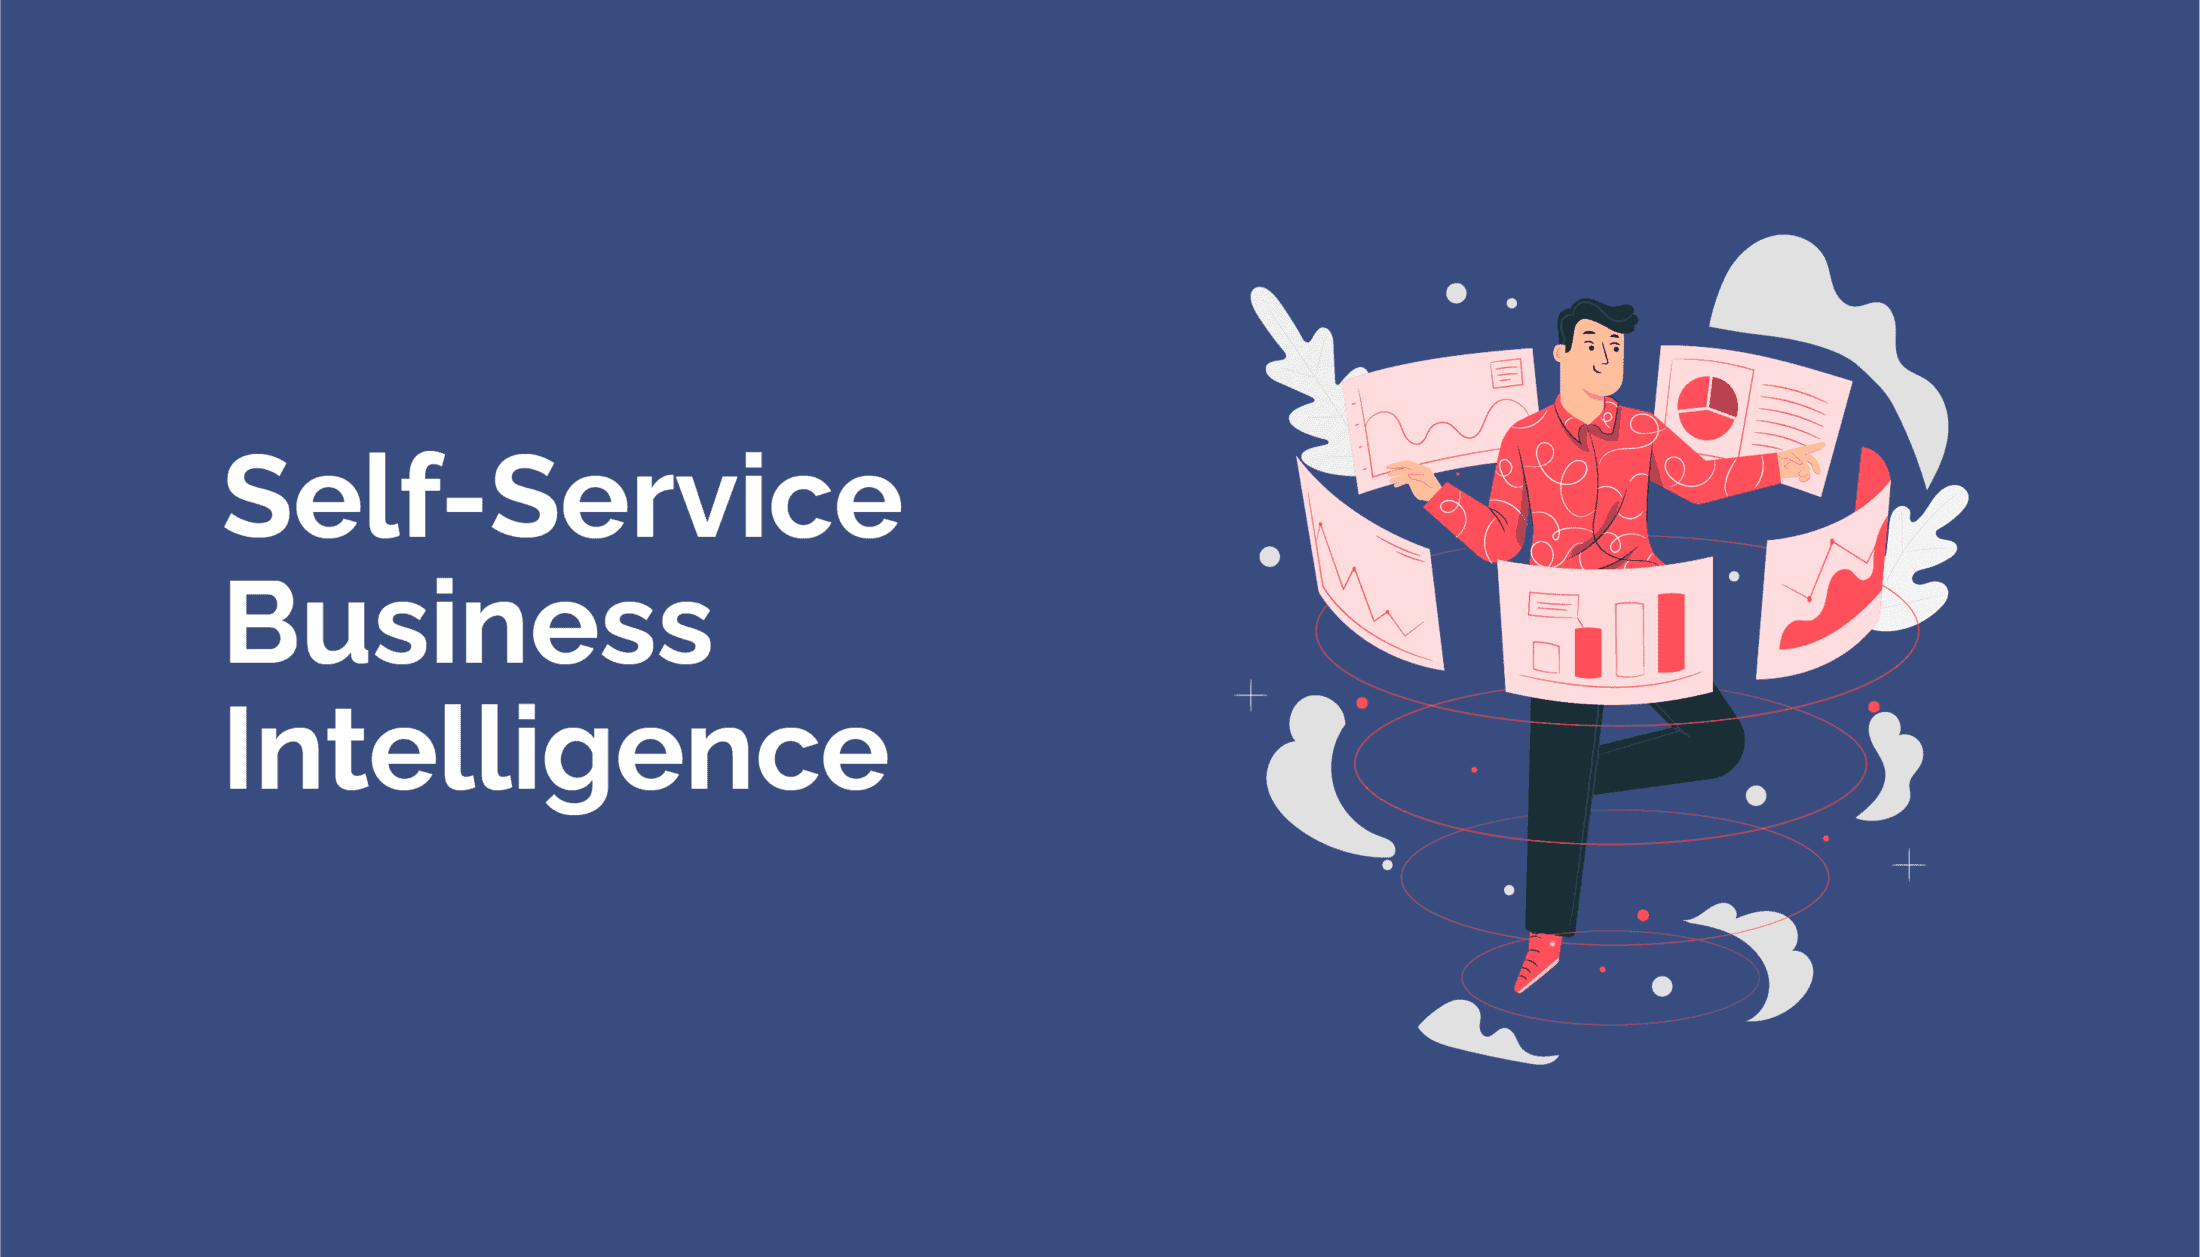 Self-Service Business Intelligence